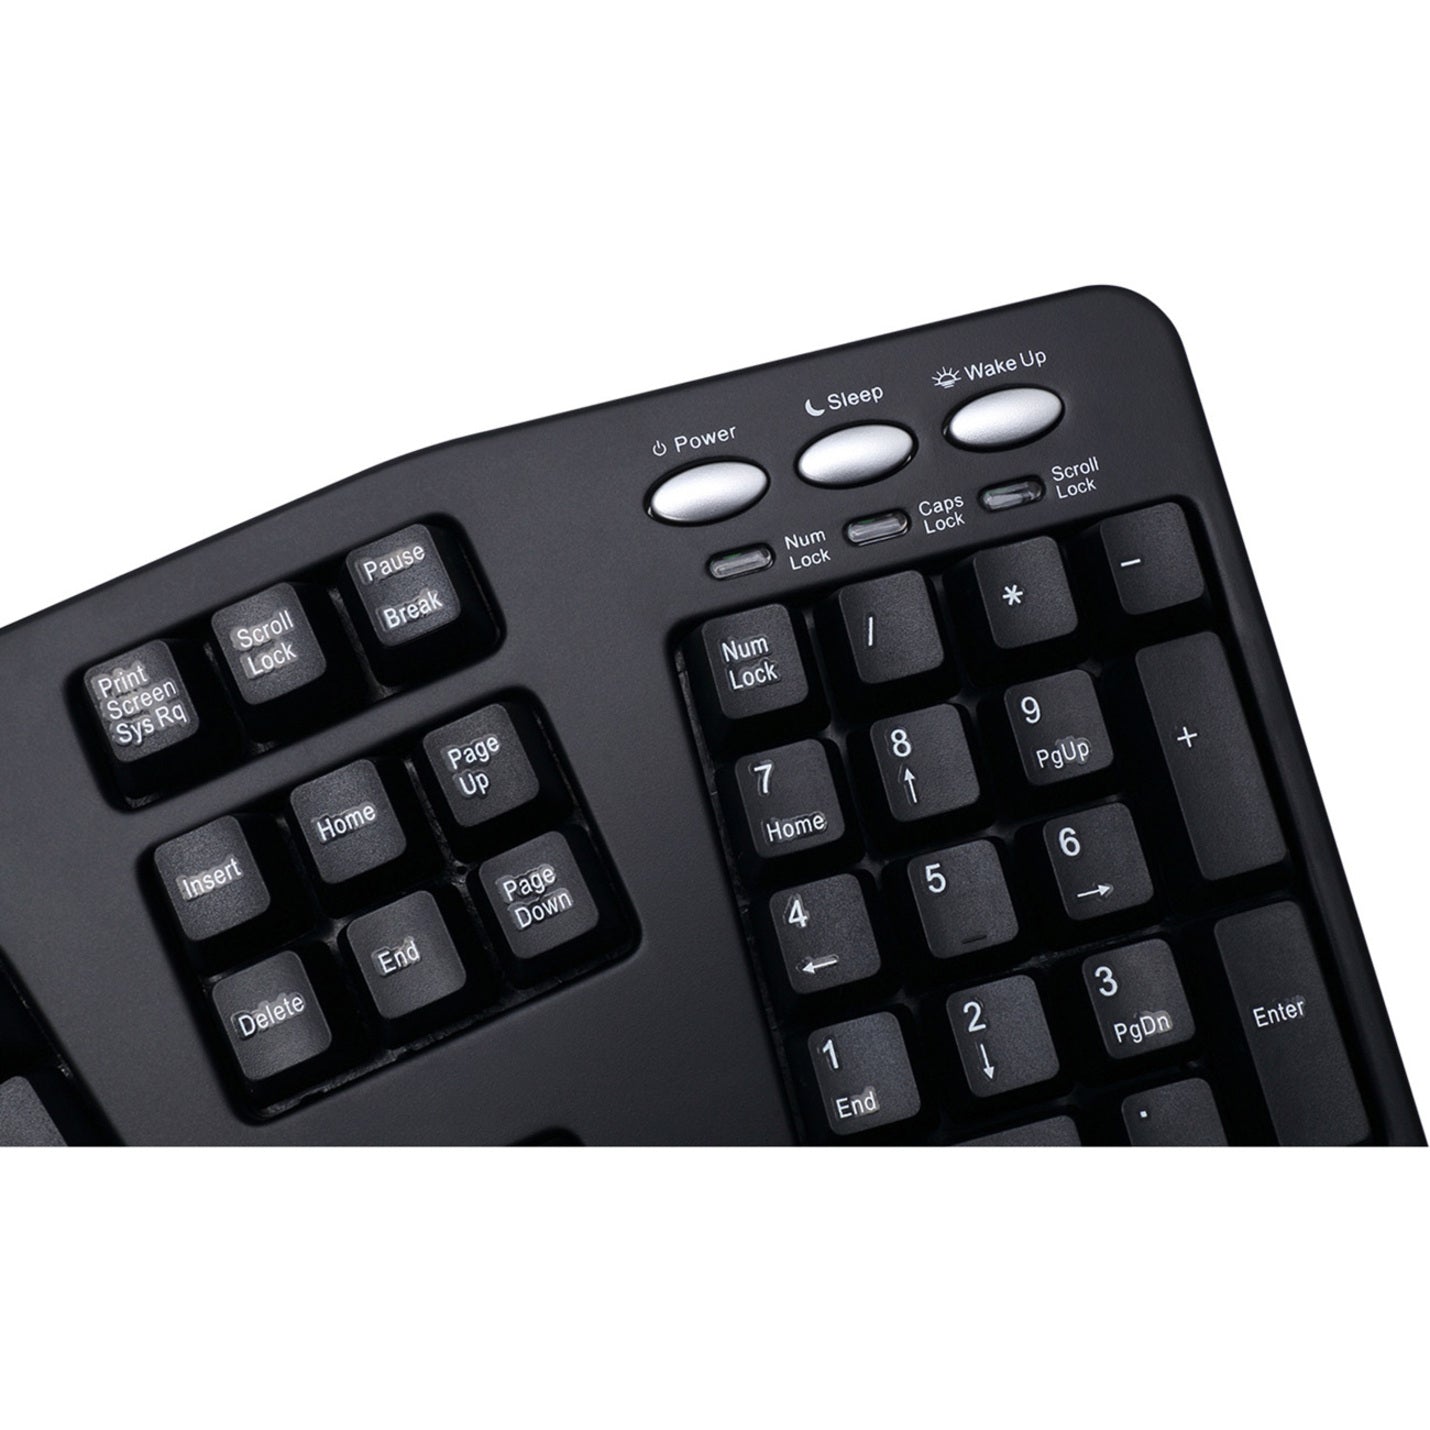 Adesso PCK-208B Tru-Form Media Contoured Ergonomic Keyboard, Multimedia Hot Keys, USB Connectivity